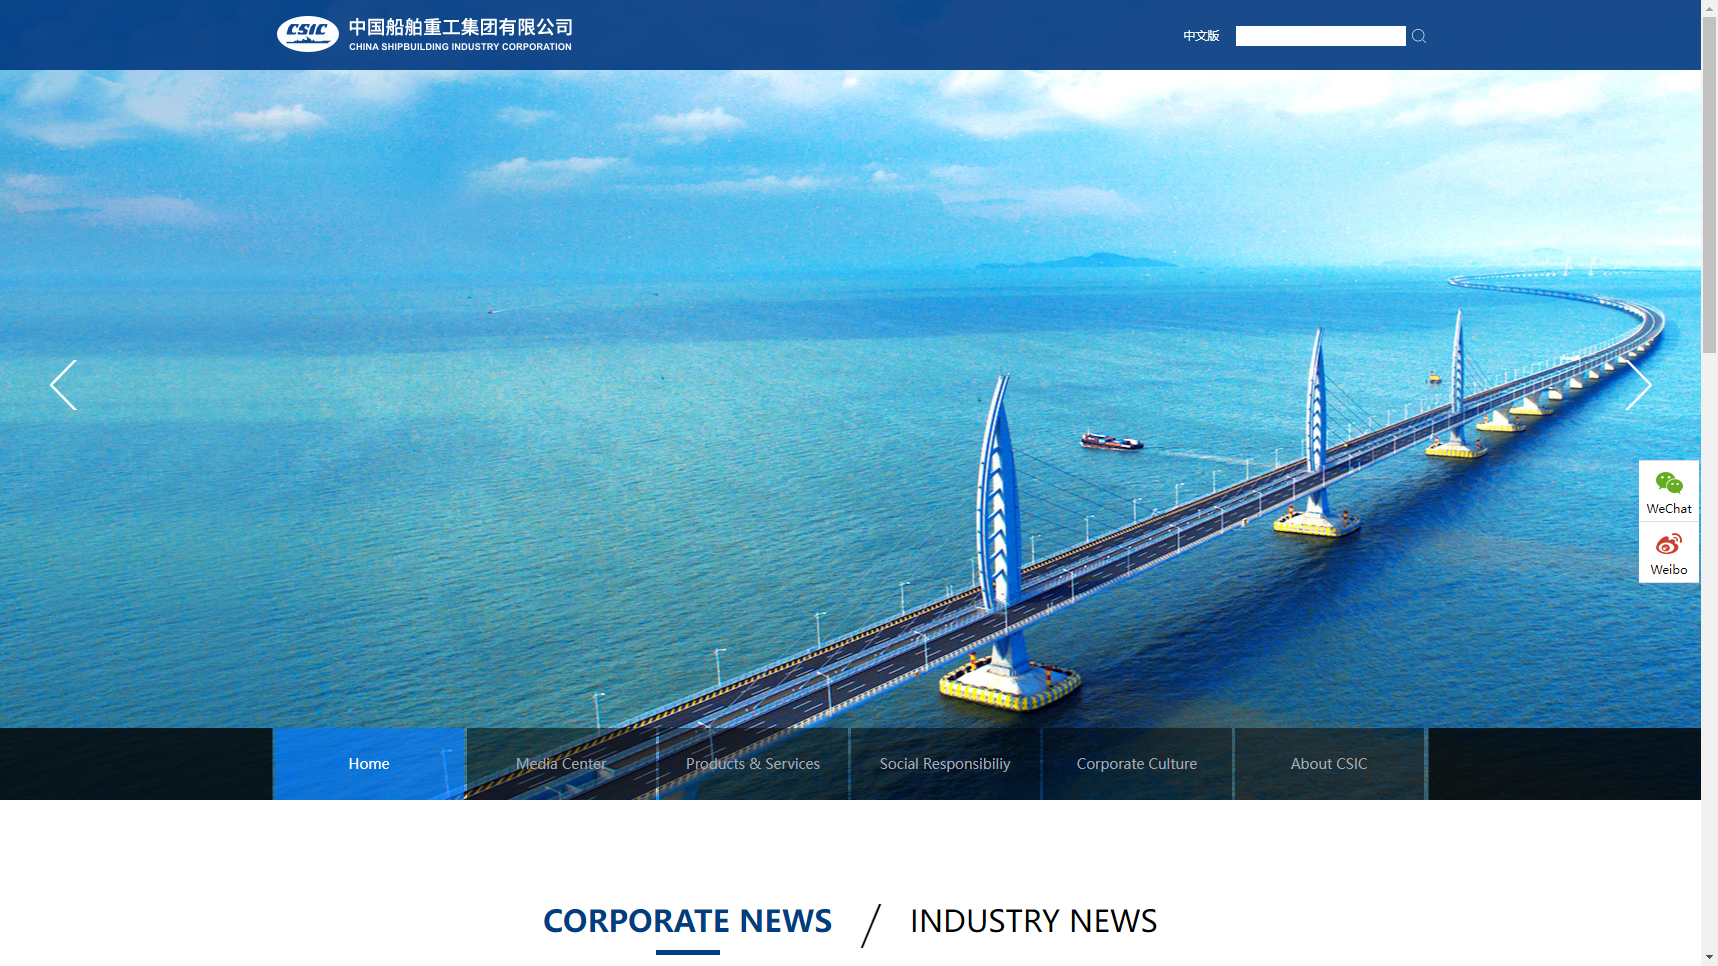 China Shipbuilding Industry Corporation (CSIC) - Vessel Manufacturer